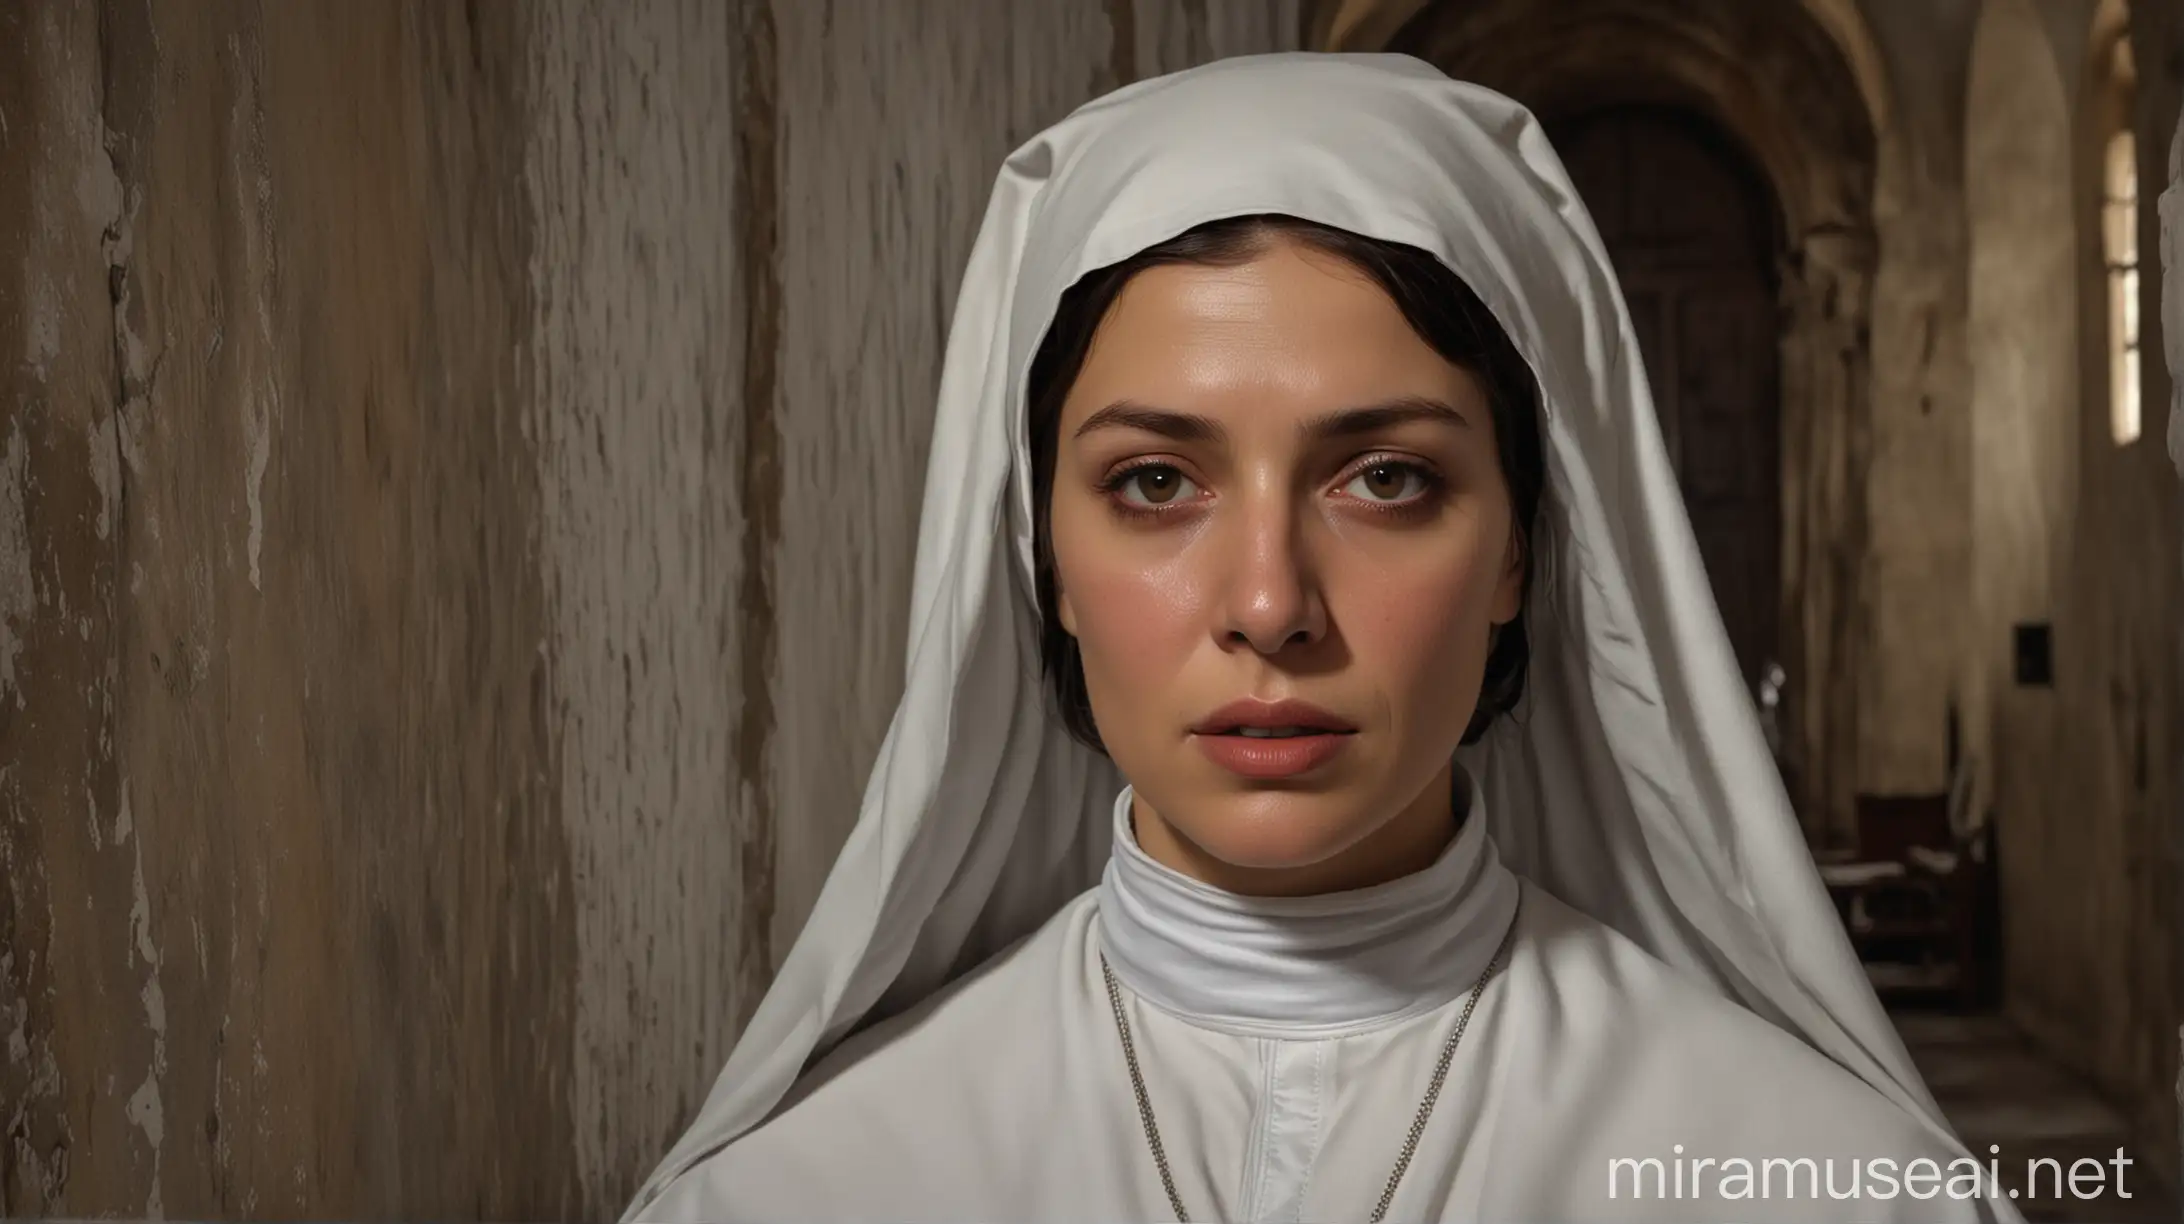 Dominican Nuns Spiritual Vision Italian Woman Crying in 19th Century Monastery Bedroom